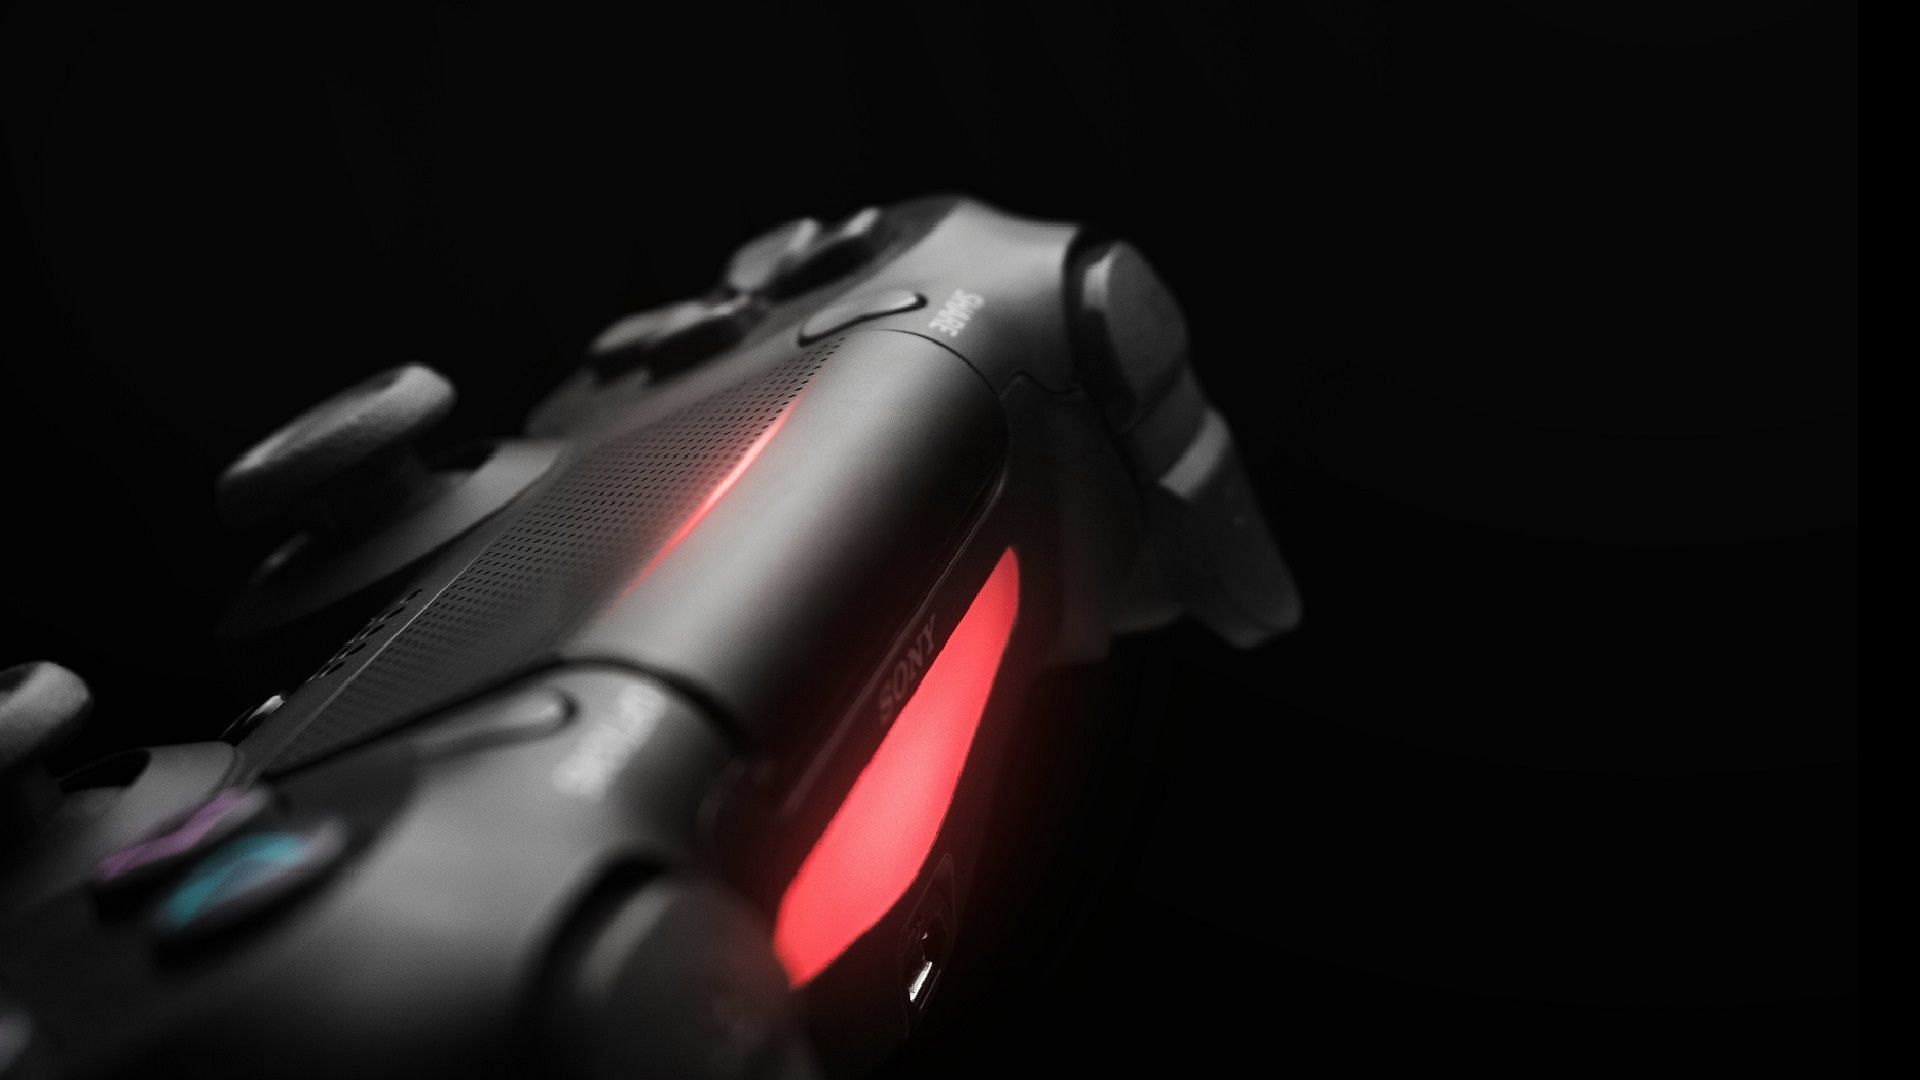 PS4 controller blinking red in the light bar (Image via Fabian Albert/Unsplash)